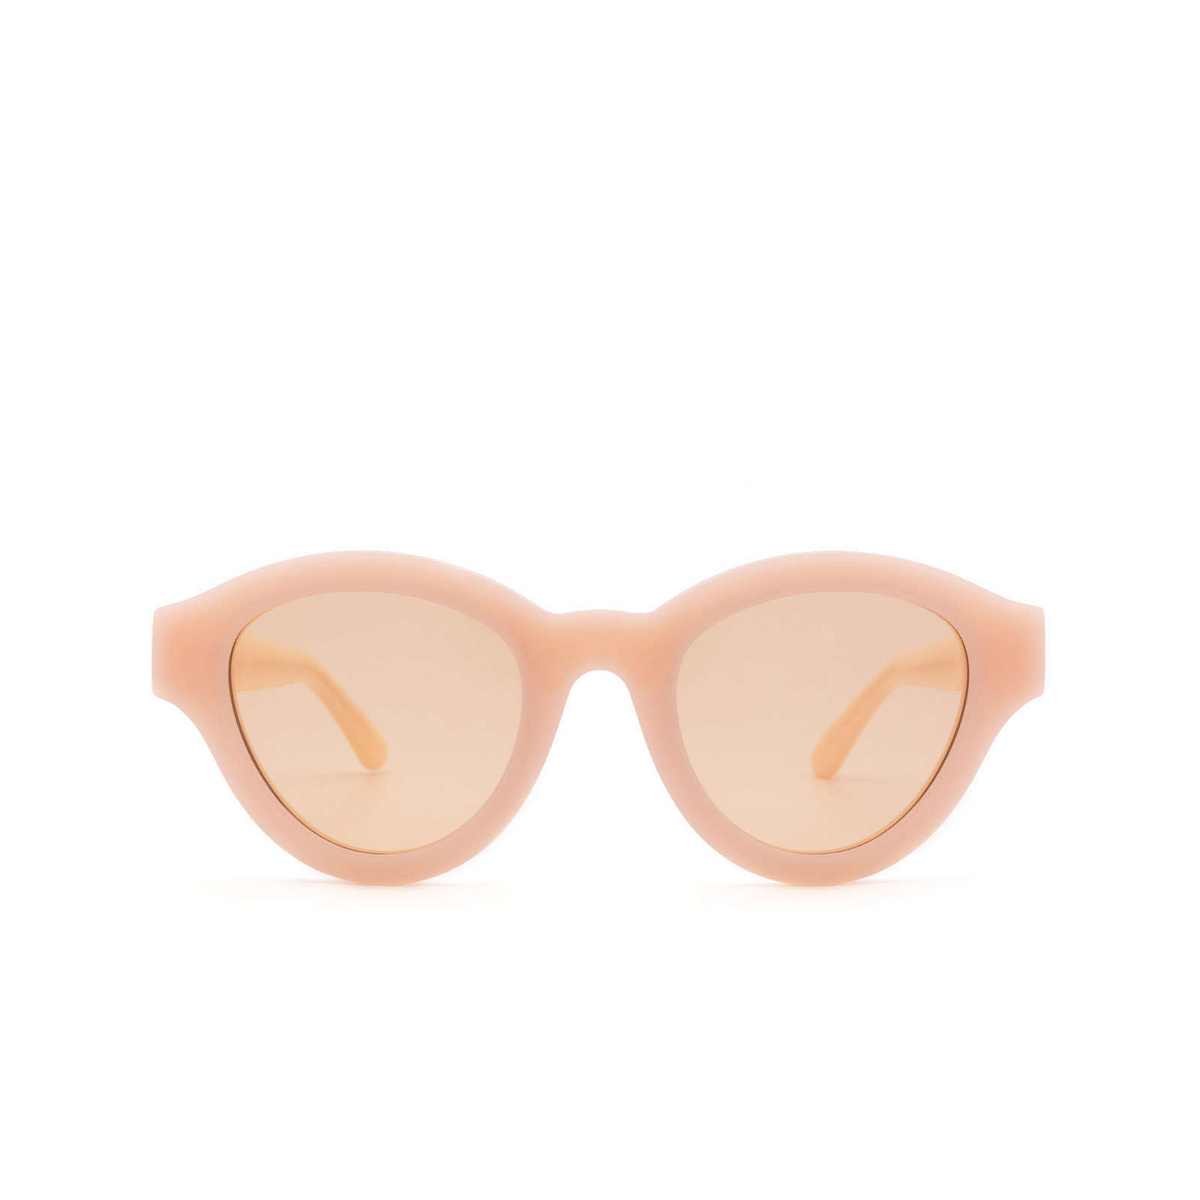 Huma DUG Sunglasses 11 Pink - front view